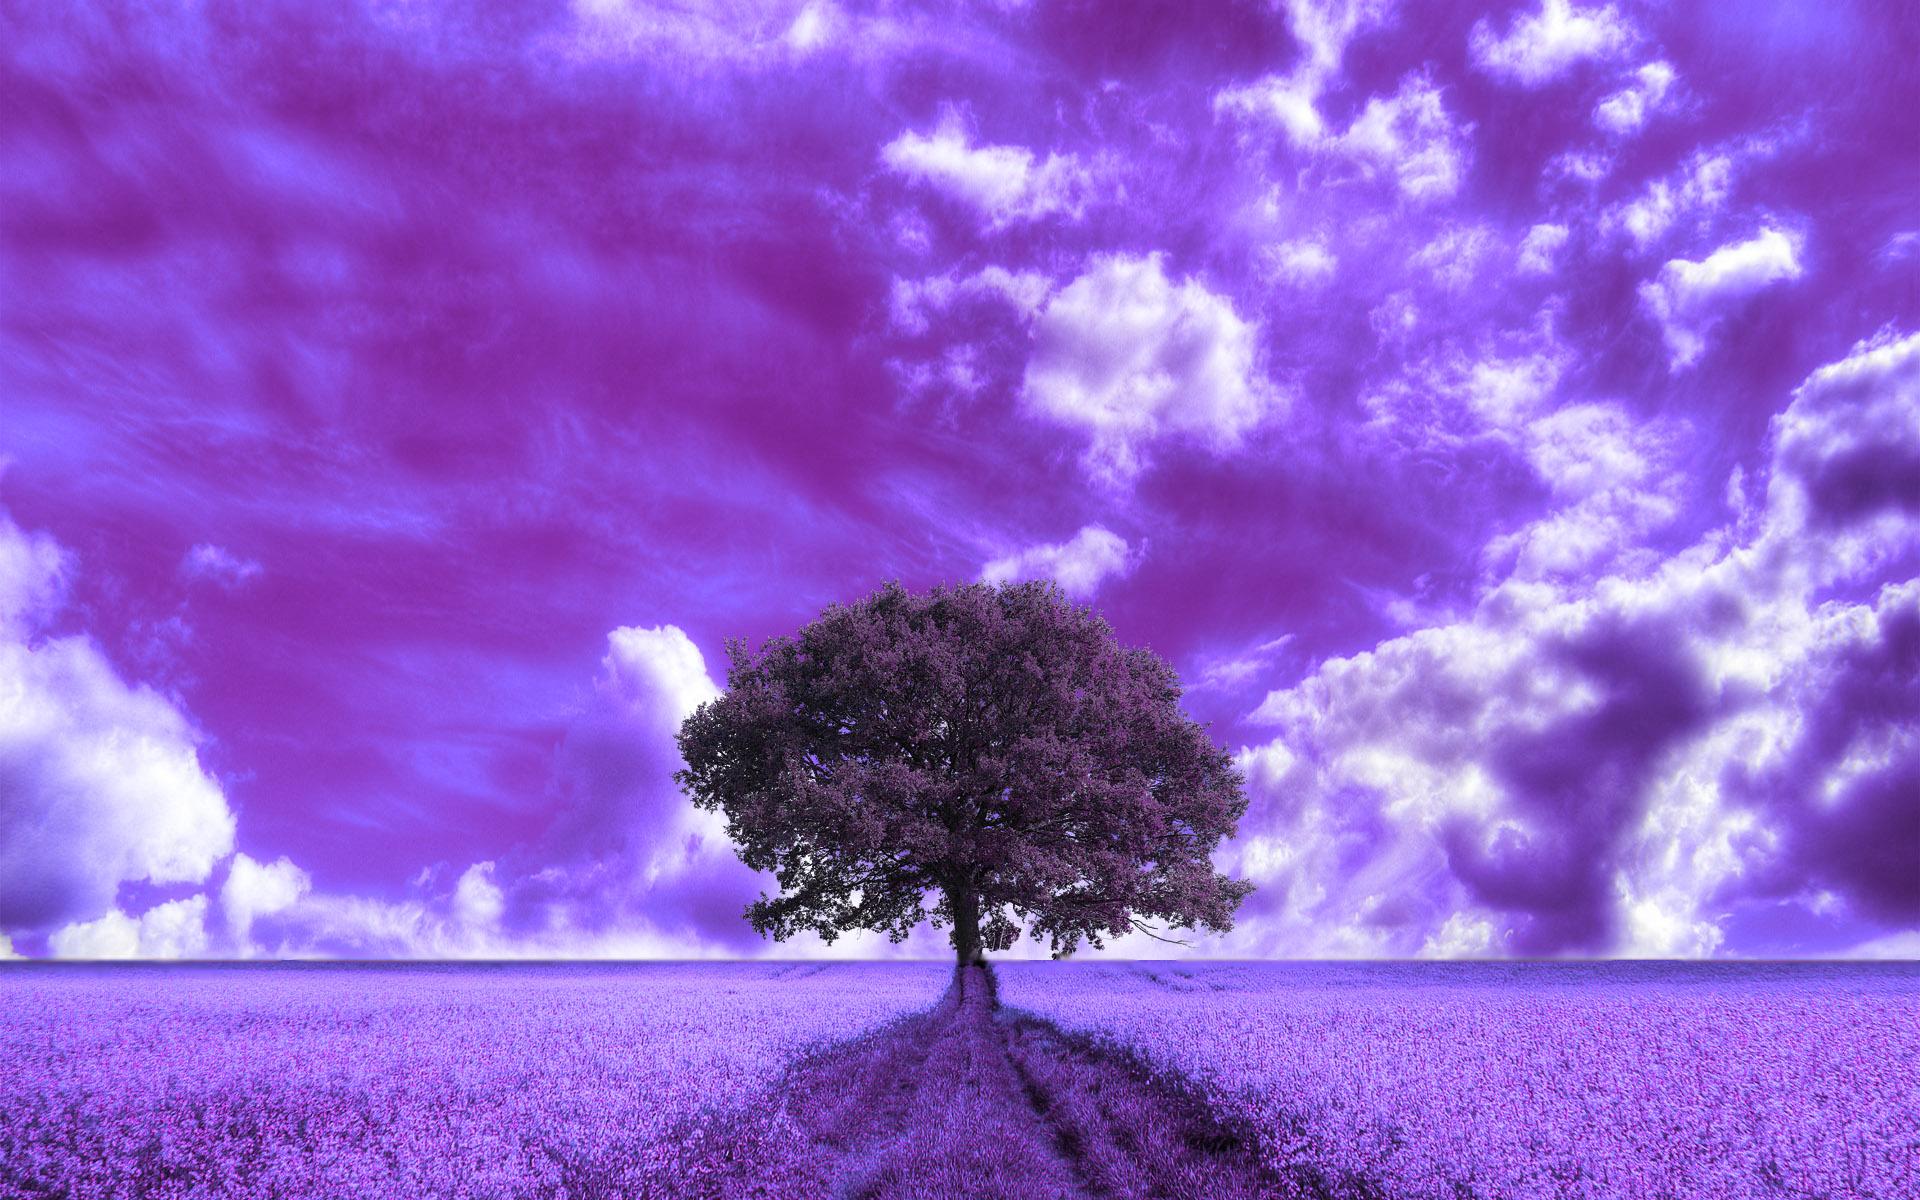 Aesthetic purple sky mobile wallpaper  Free Vector  rawpixel